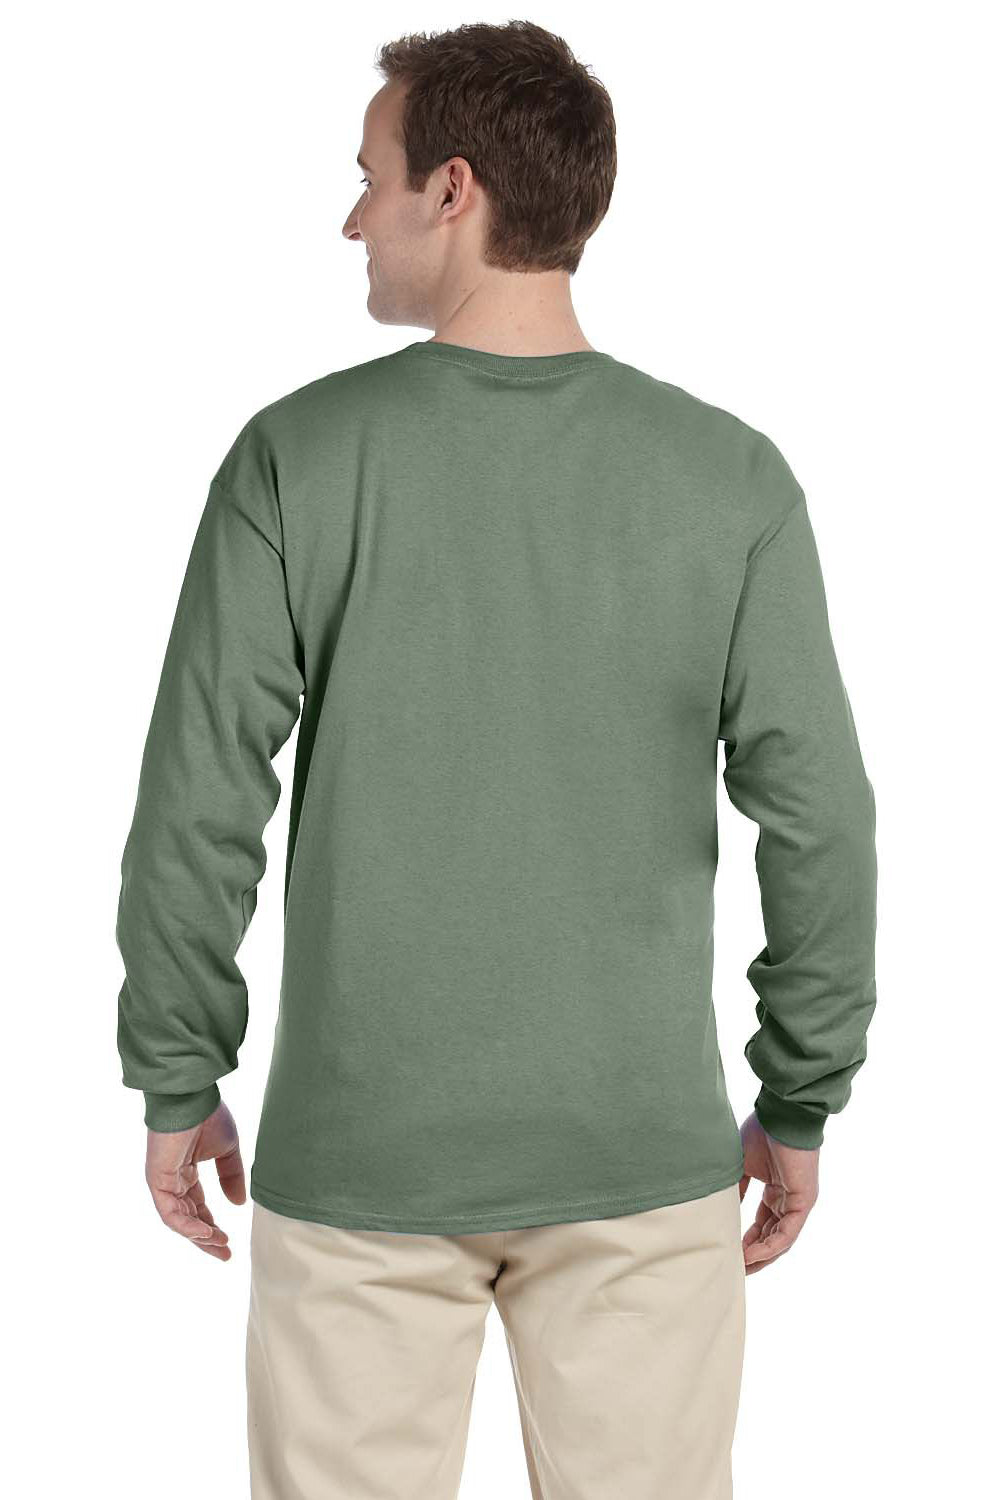 Fruit Of The Loom 4930 Mens HD Jersey Long Sleeve Crewneck T-Shirt Sagestone Green Back